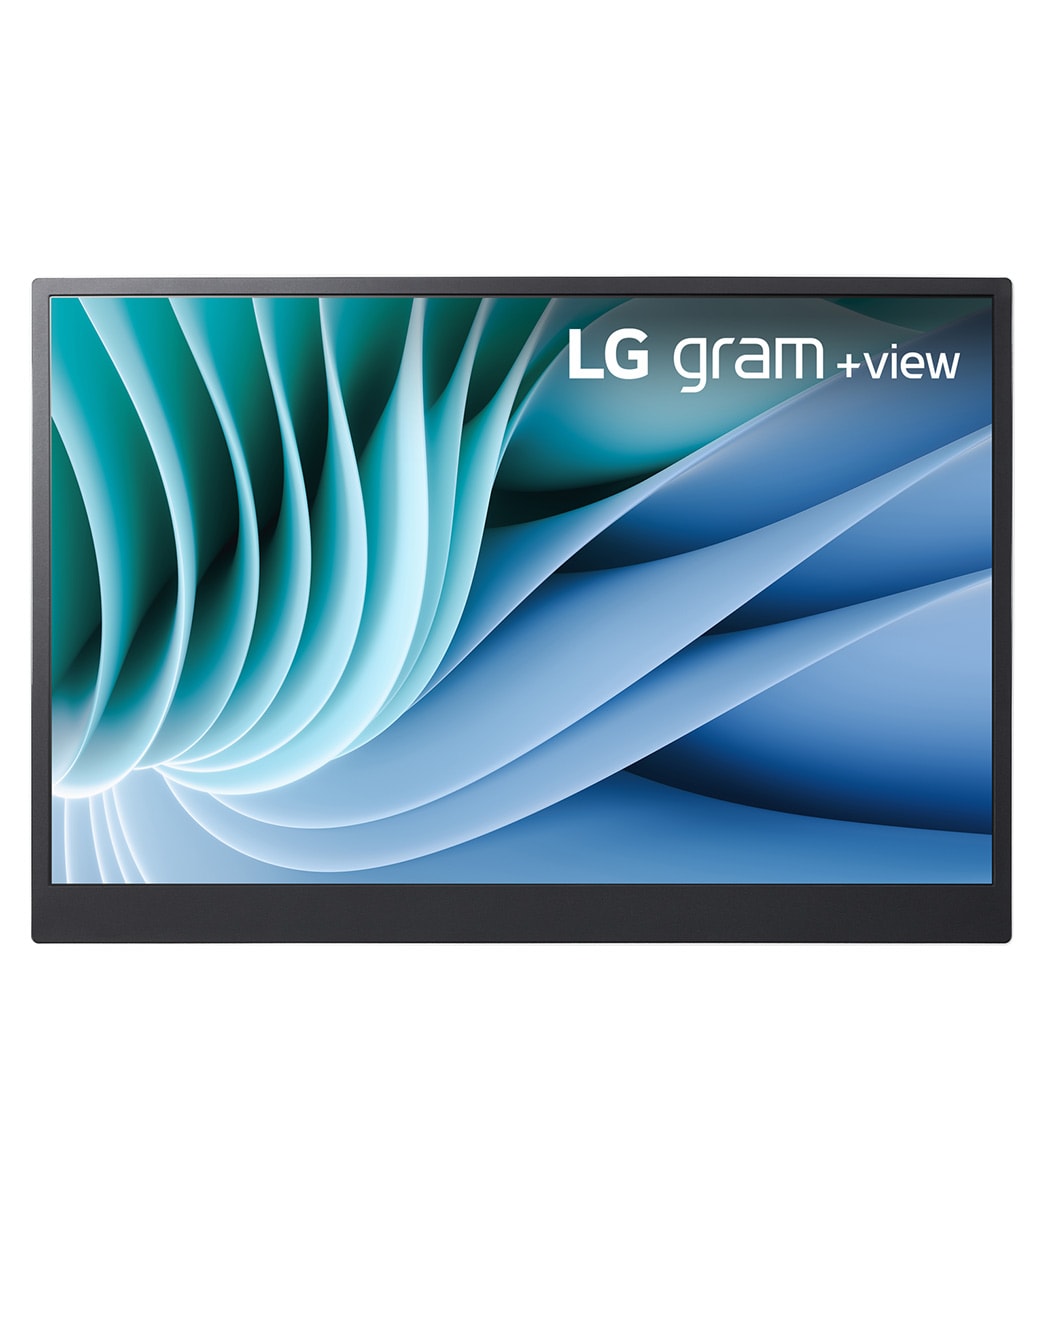 LG gram +view 16MR70 【美品】スマホ・タブレット・パソコン